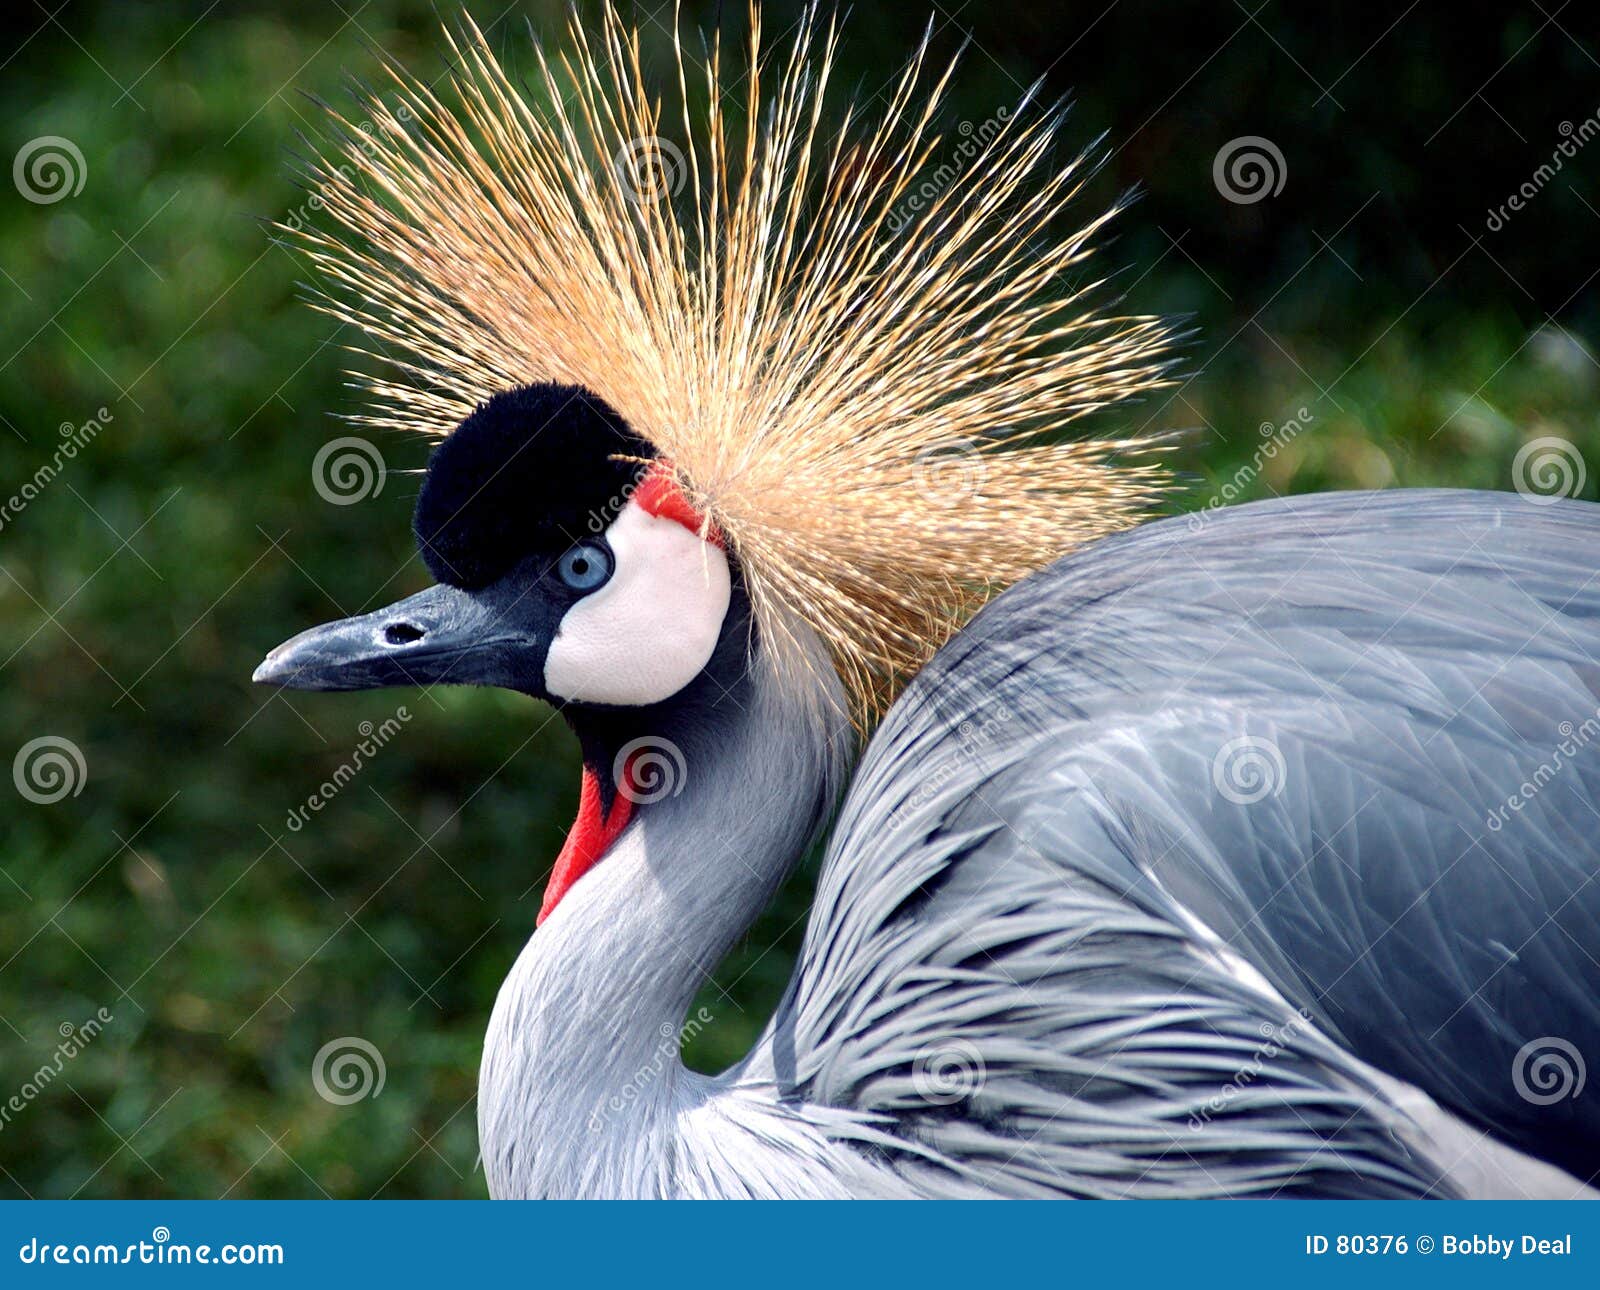 grey crowned crane